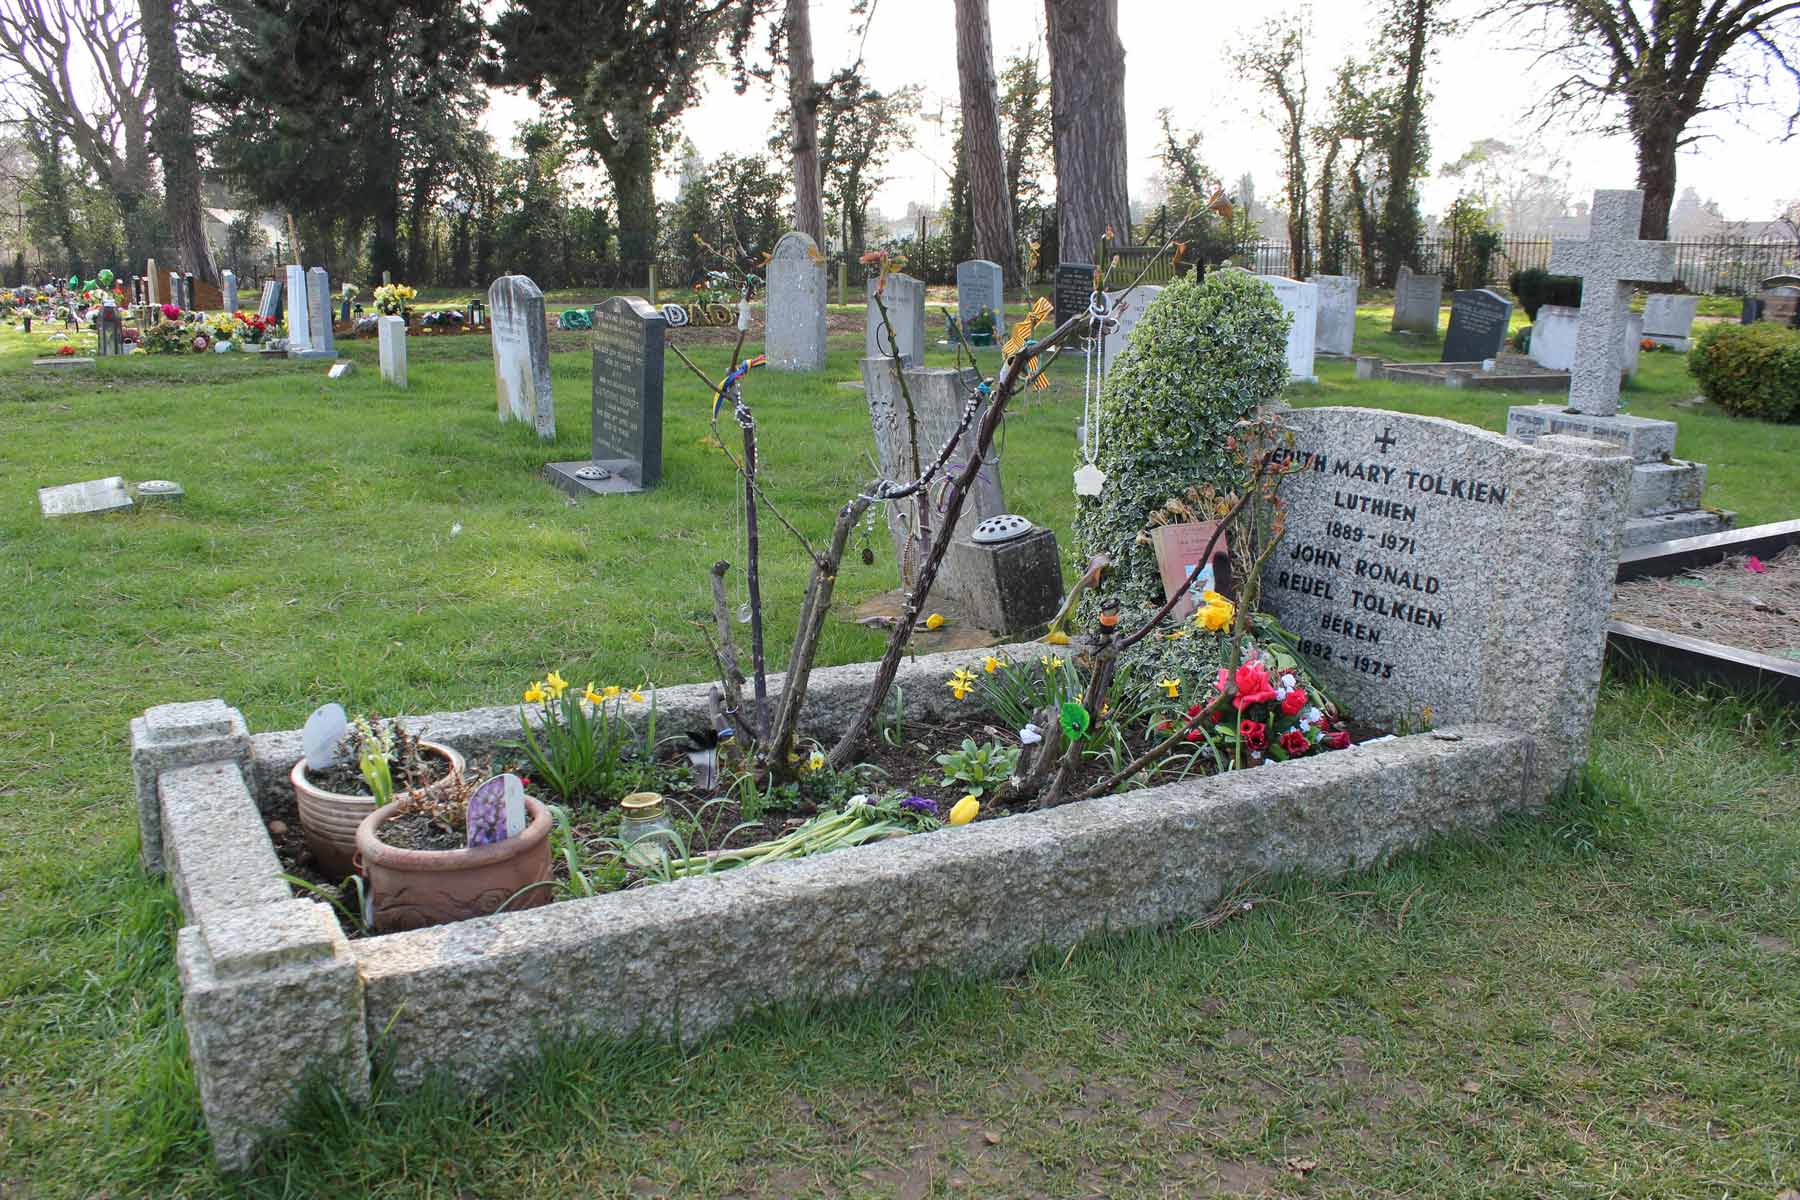 Tolkien's grave